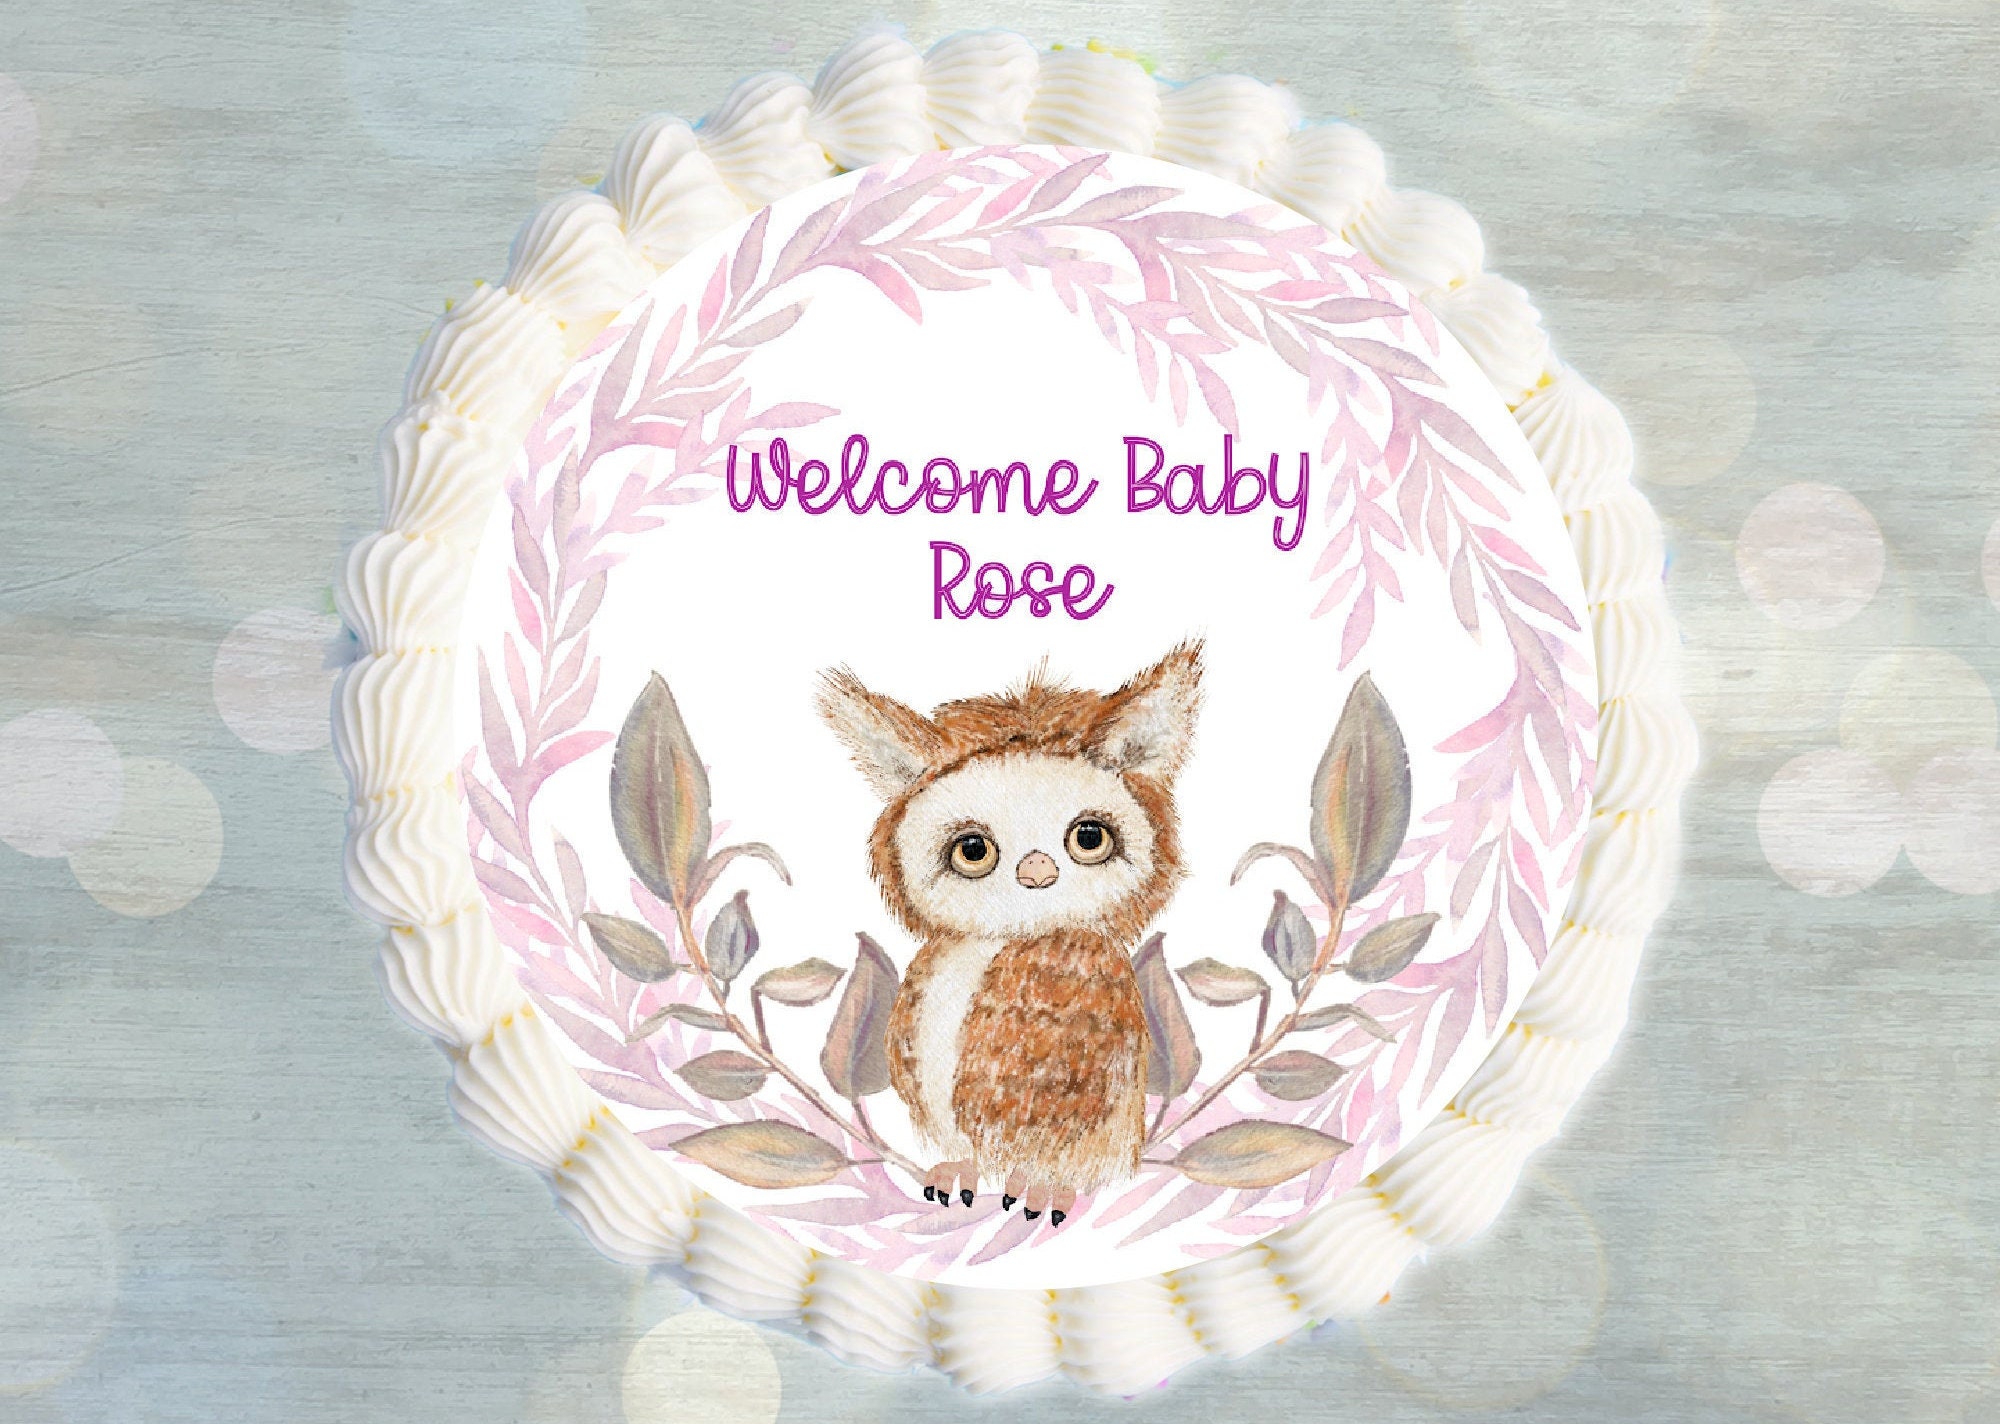 CUTE BABY OWL PERSONALISED BIRTHDAY PRECUT EDIBLE CAKE TOPPER 7.5 INCH J1916 